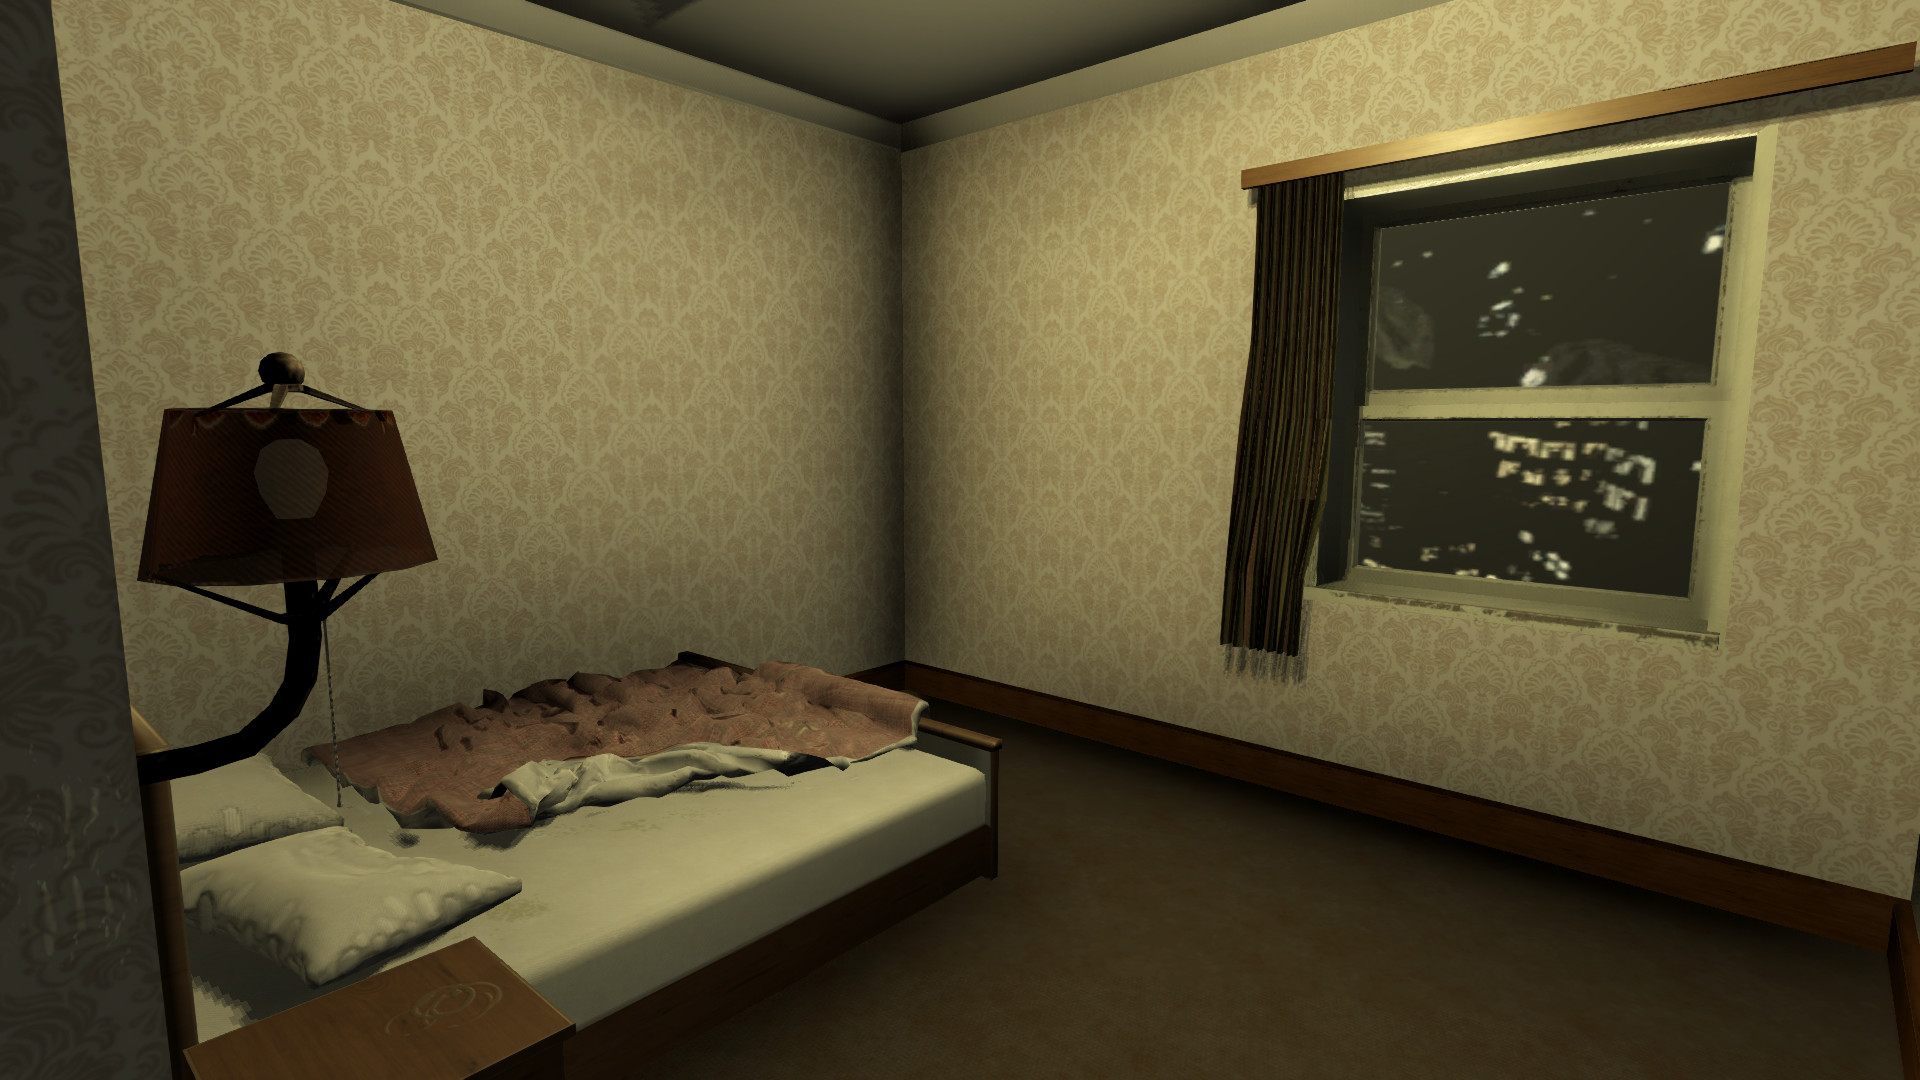 Shining Hotel: Lost in Nowhere screenshot